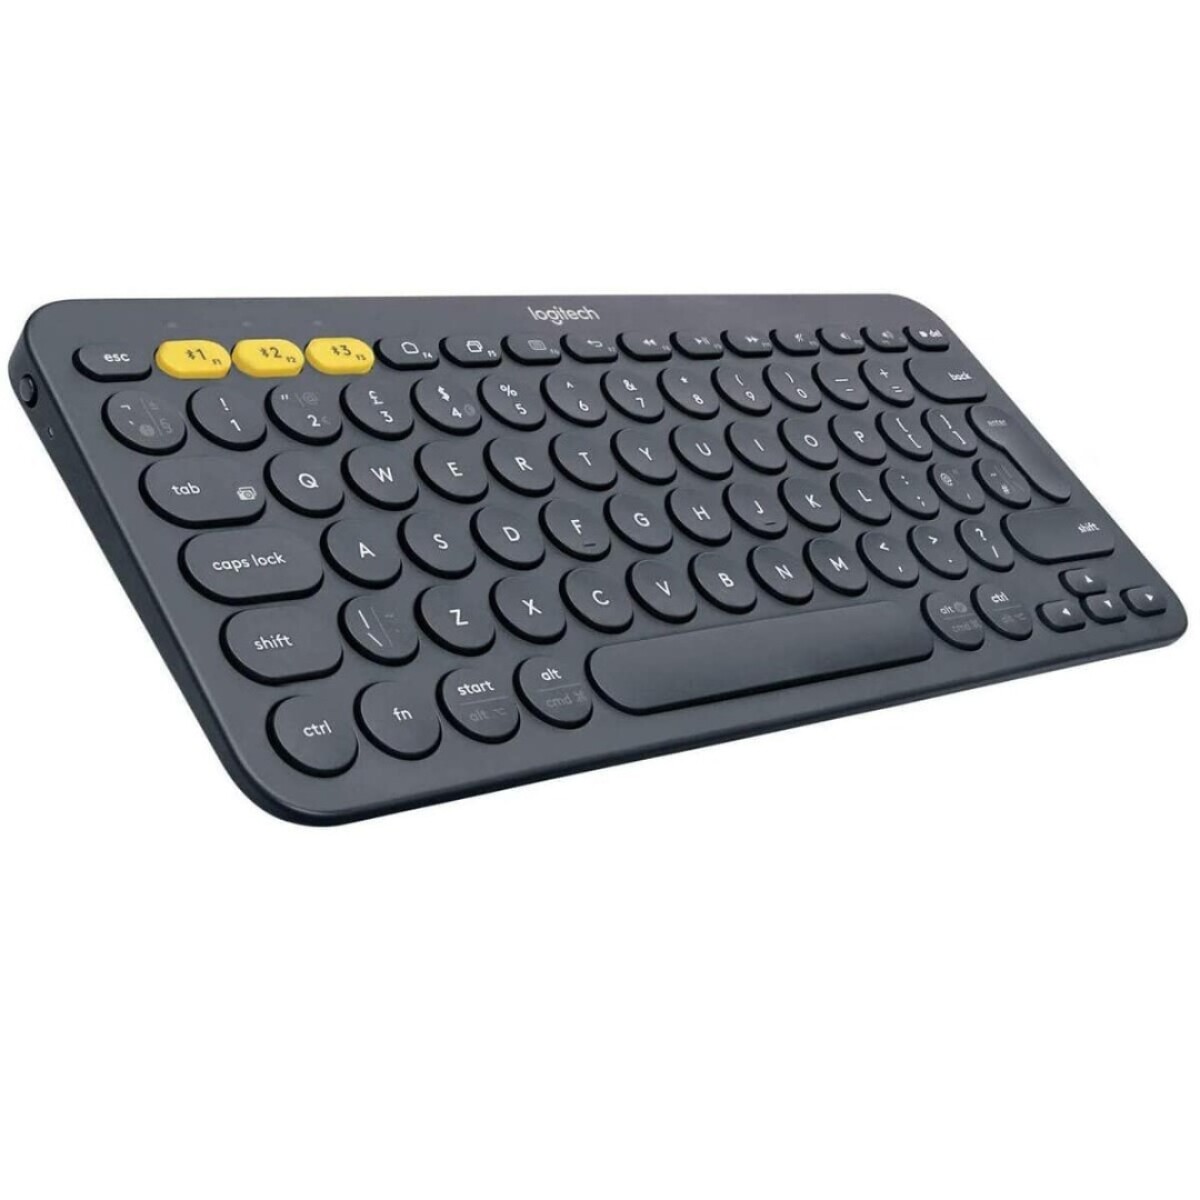 Logitech 920-007562 teclado k380 inalambrico negro bluetooth - Logitech 920-007562 Teclado K380 Inalambrico Negro Bluetooth 